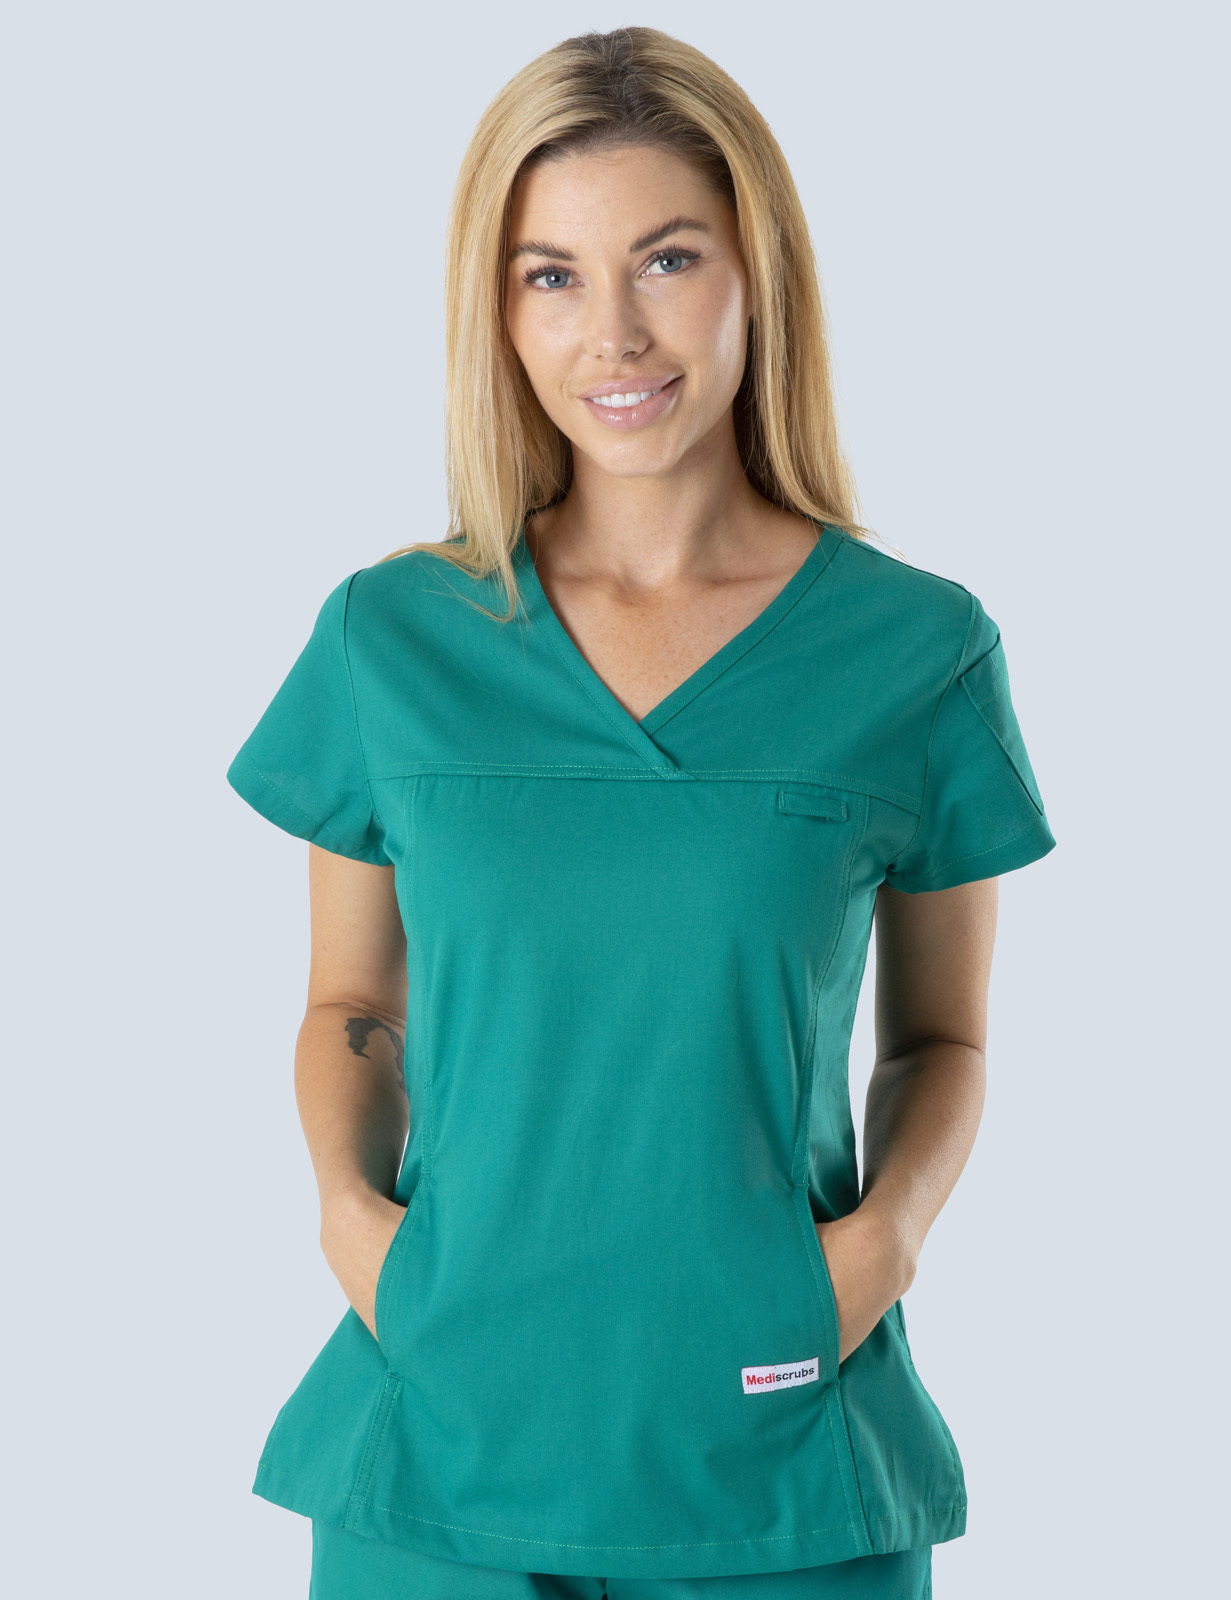 Queensland Children's Hospital Emergency Department Enrolled Nurse Uniform Top Bundle  (Women's Fit Top in Hunter incl Logos)